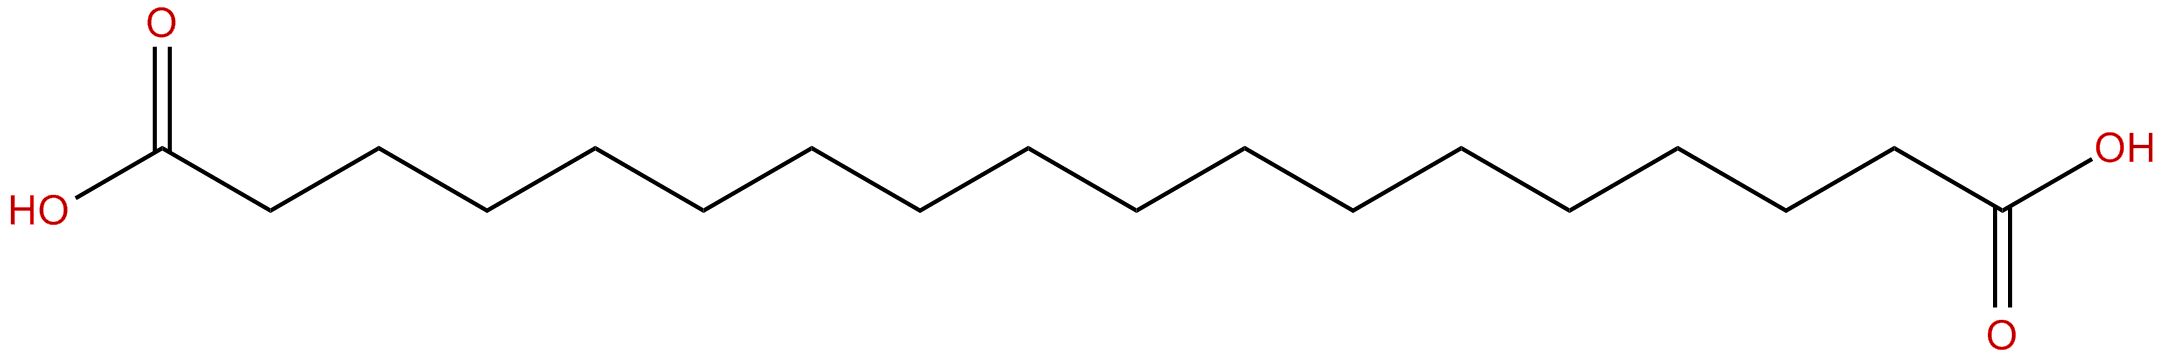 Image of 1,18-octadecanedioic acid